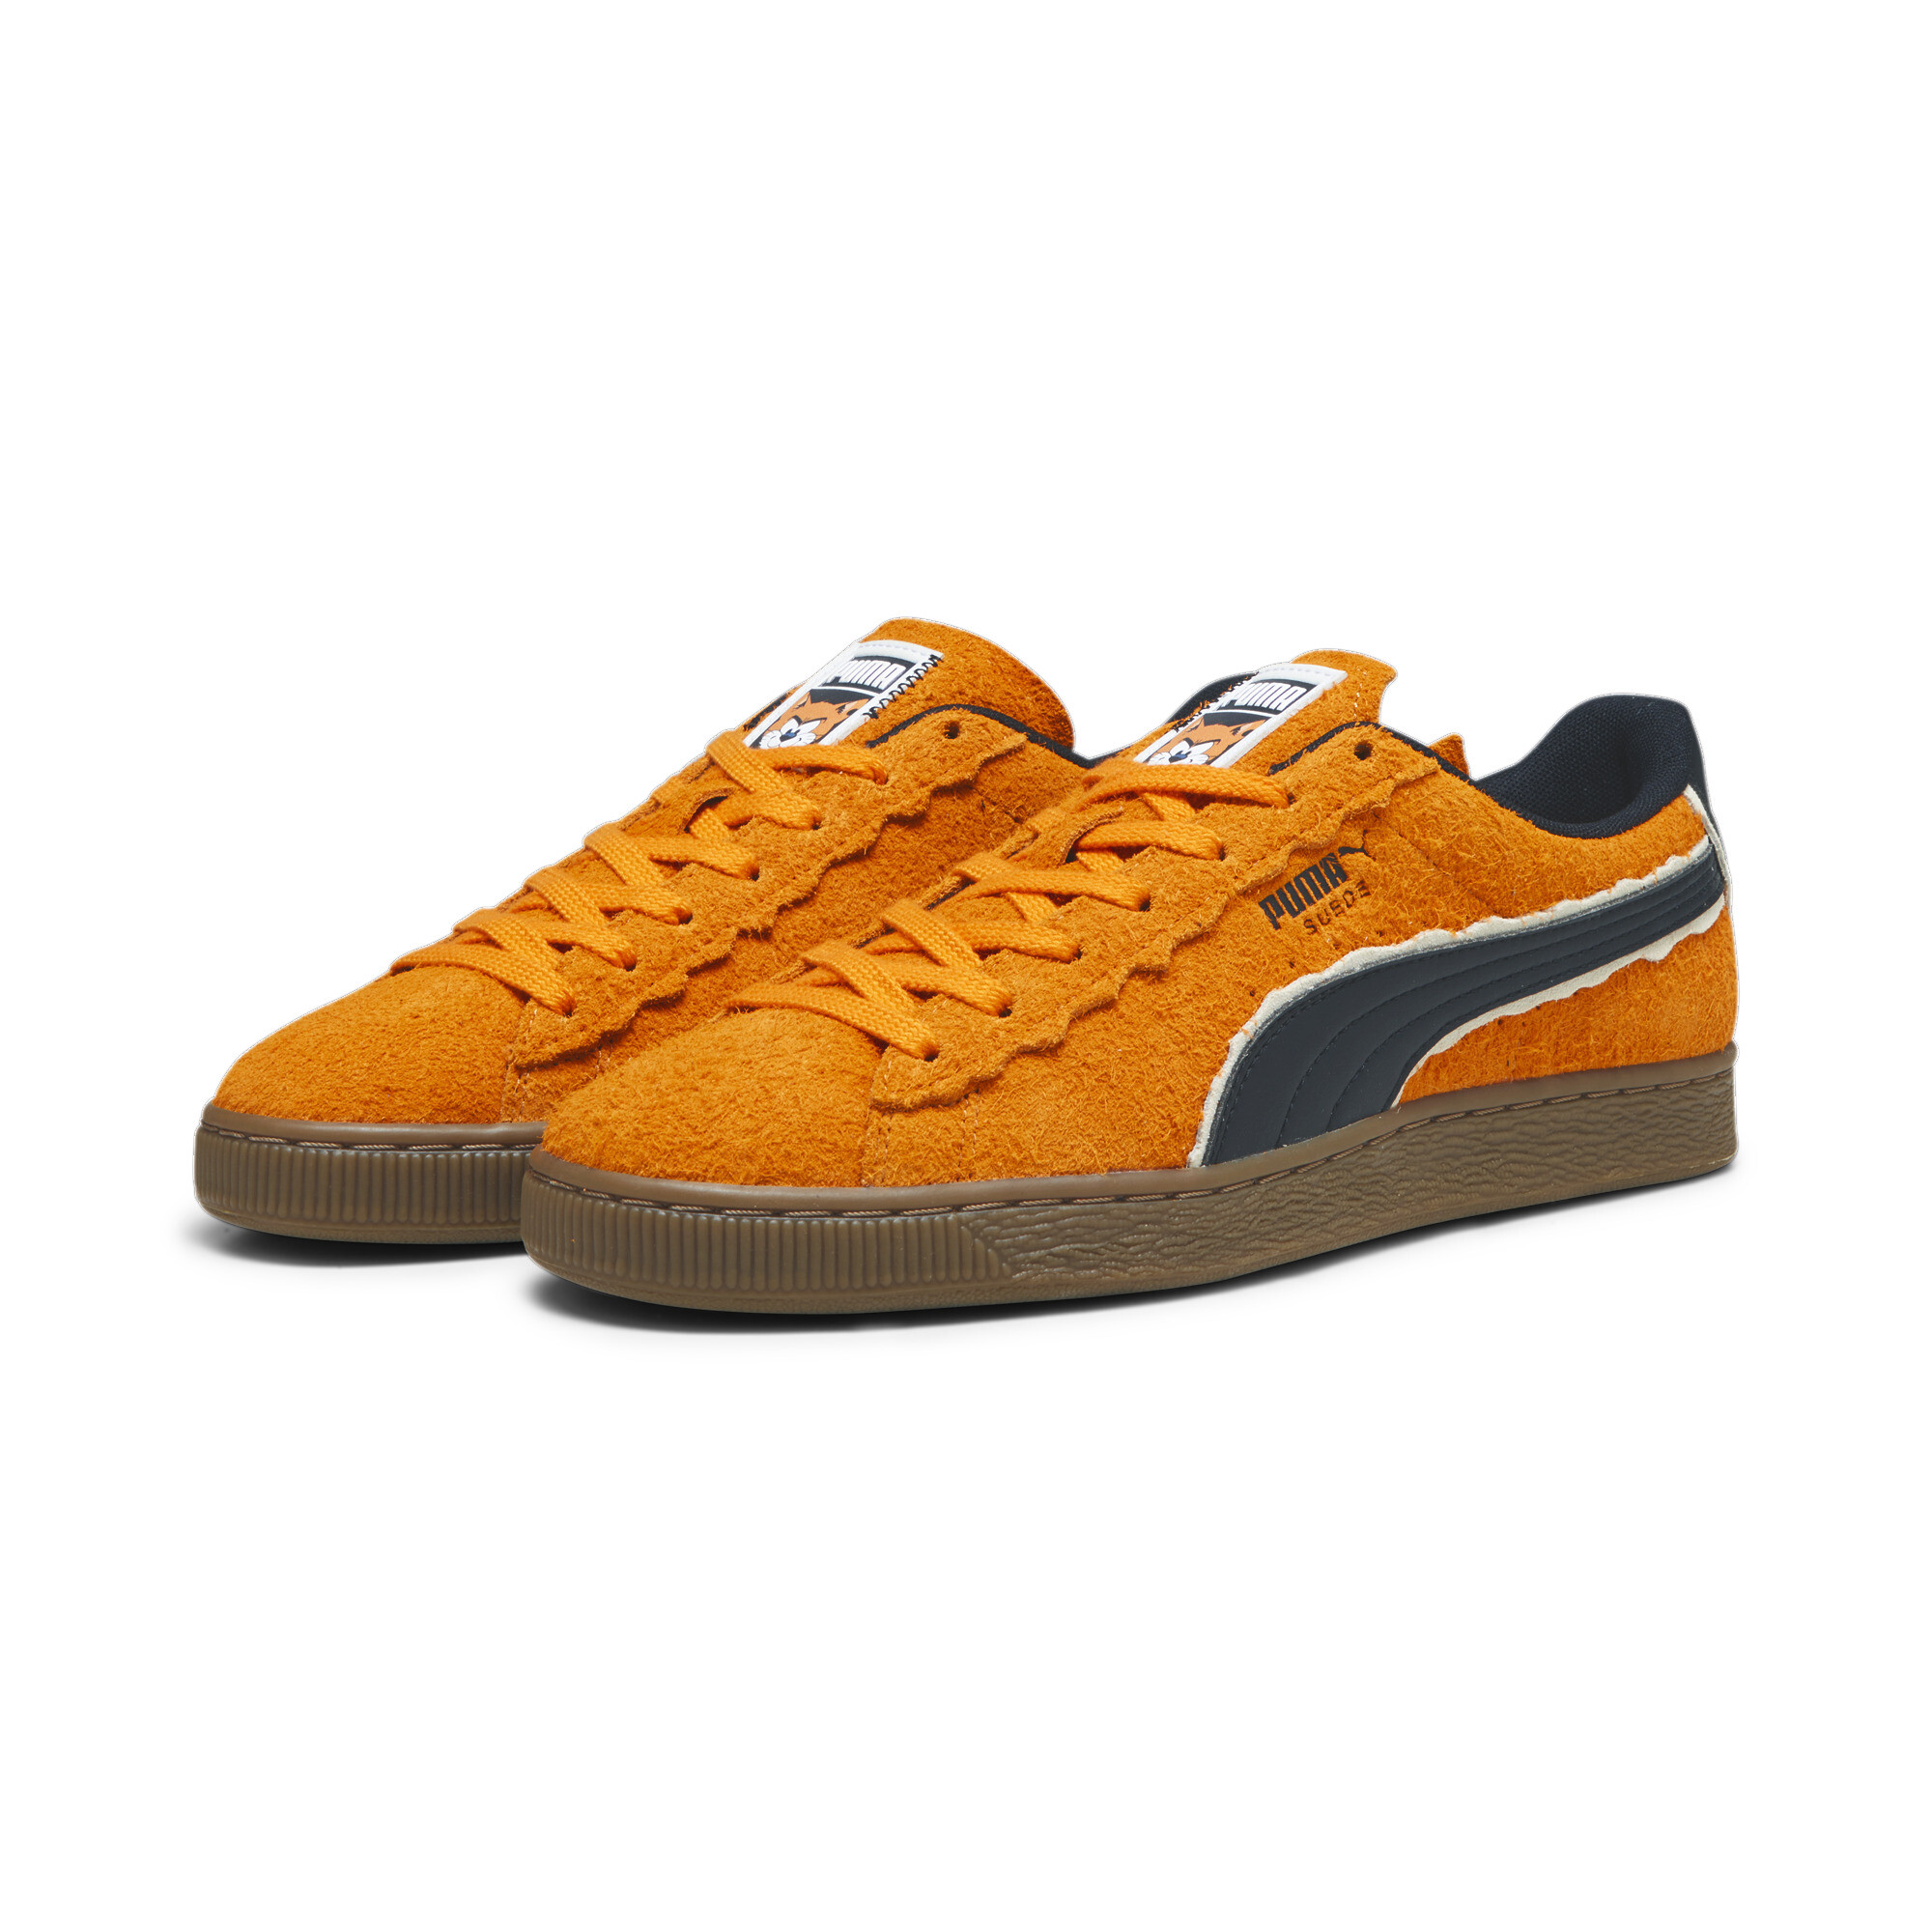 Men's PUMA X THE SMURFS Suede Sneakers In Orange, Size EU 42